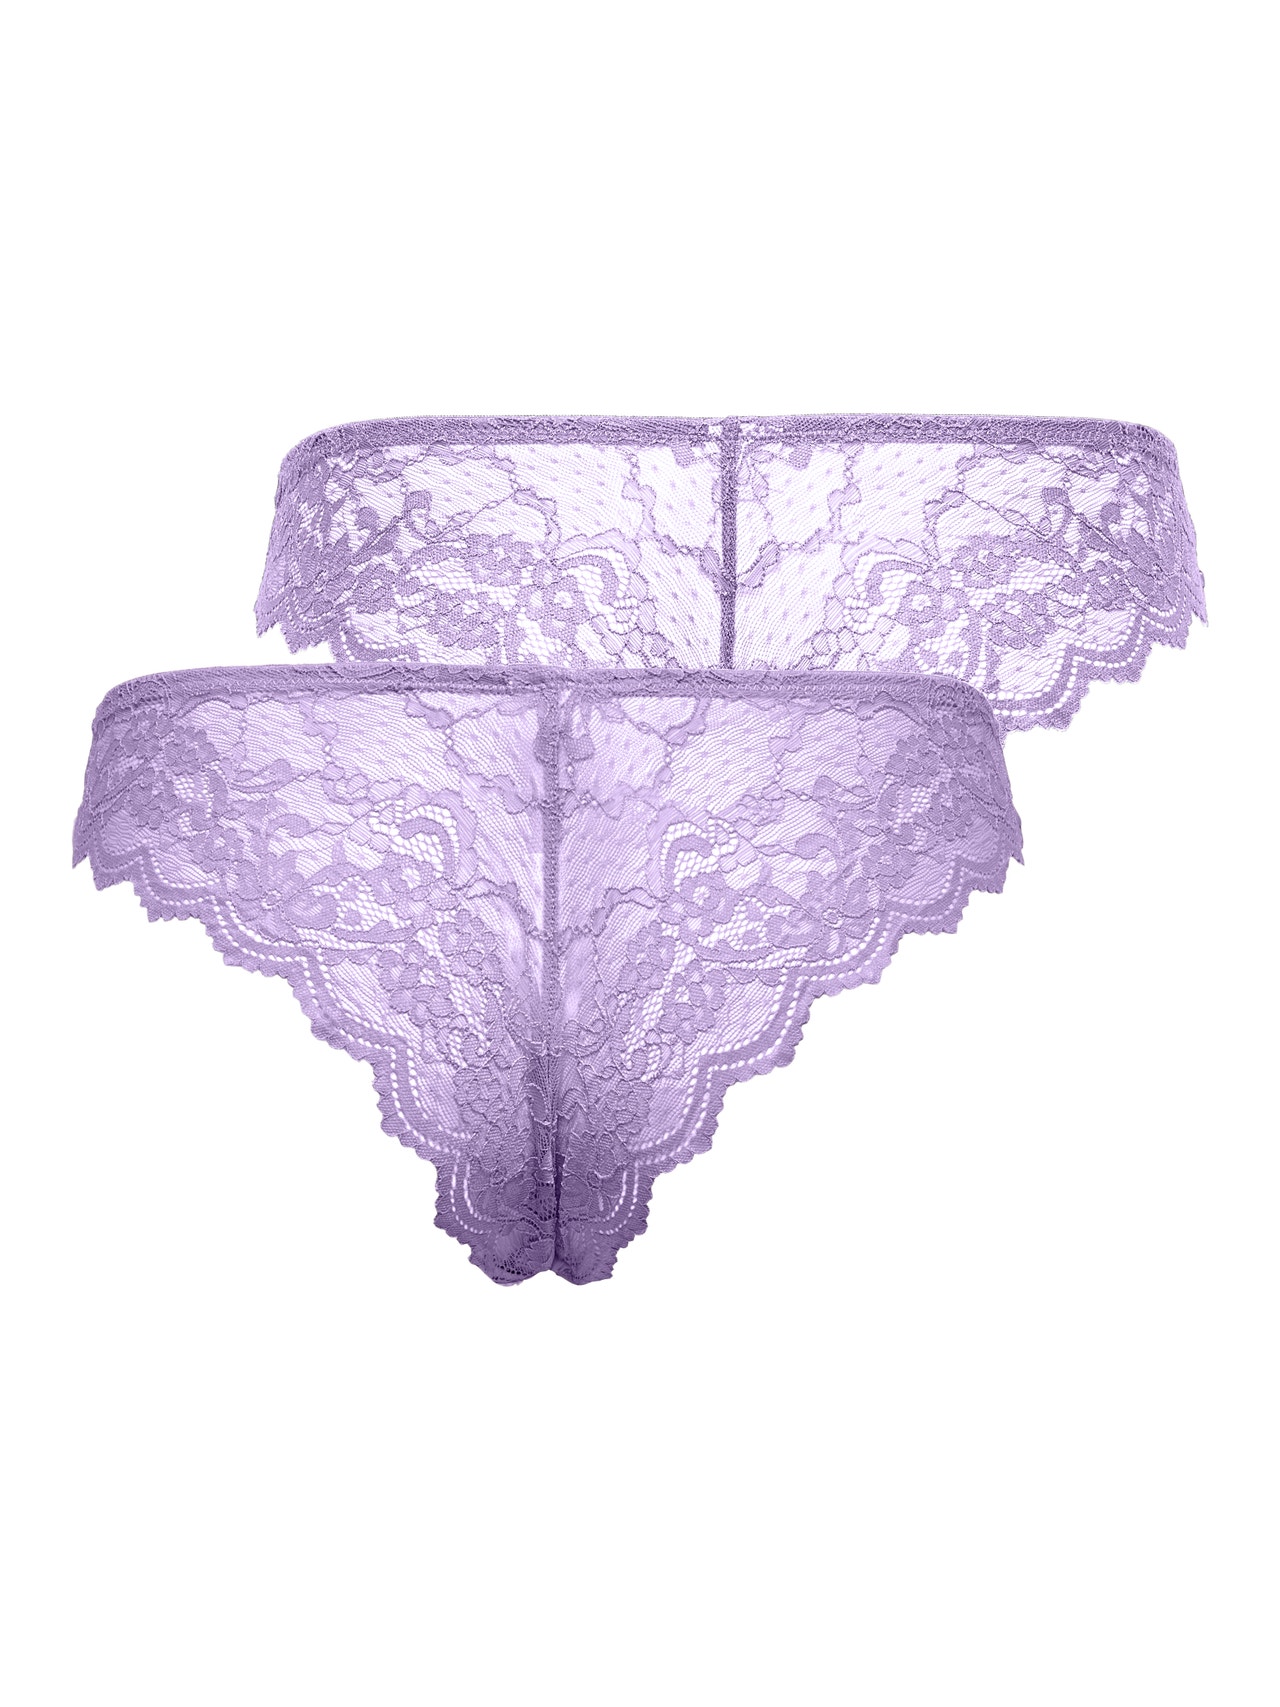 ONLY High waist Ondergoed -Purple Rose - 15283598